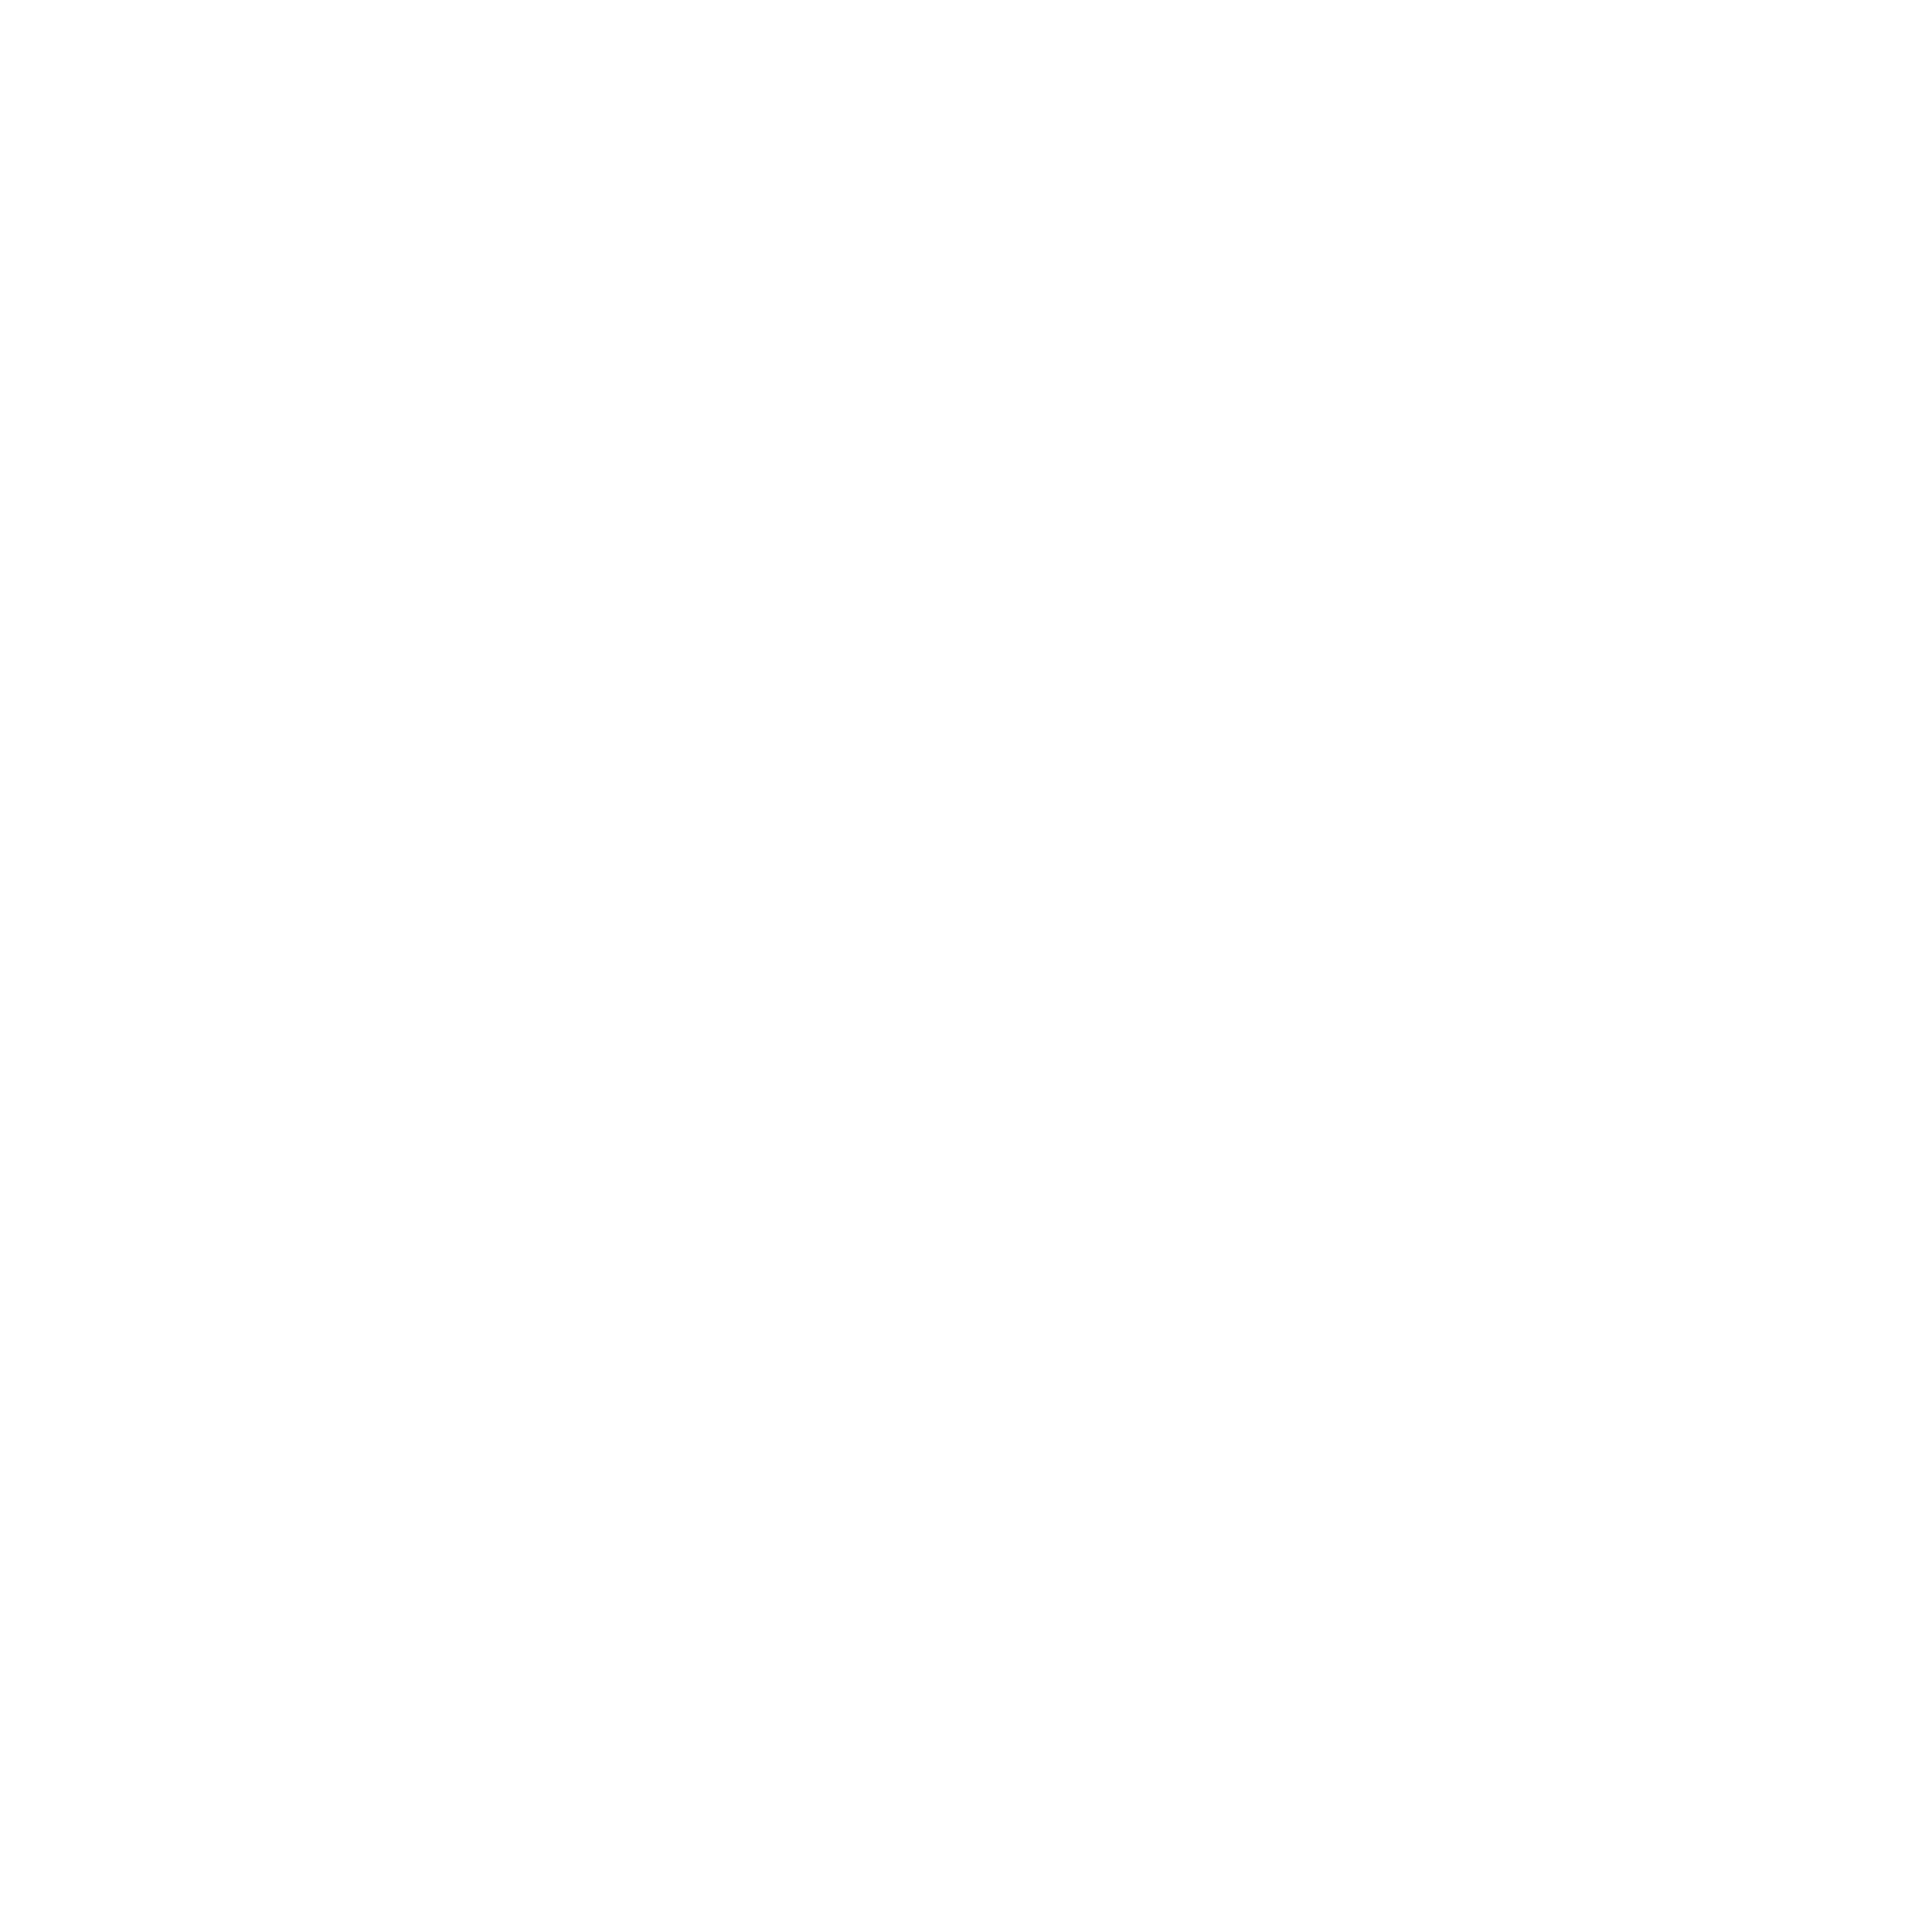 tata-communications-logo-black-and-white (1)